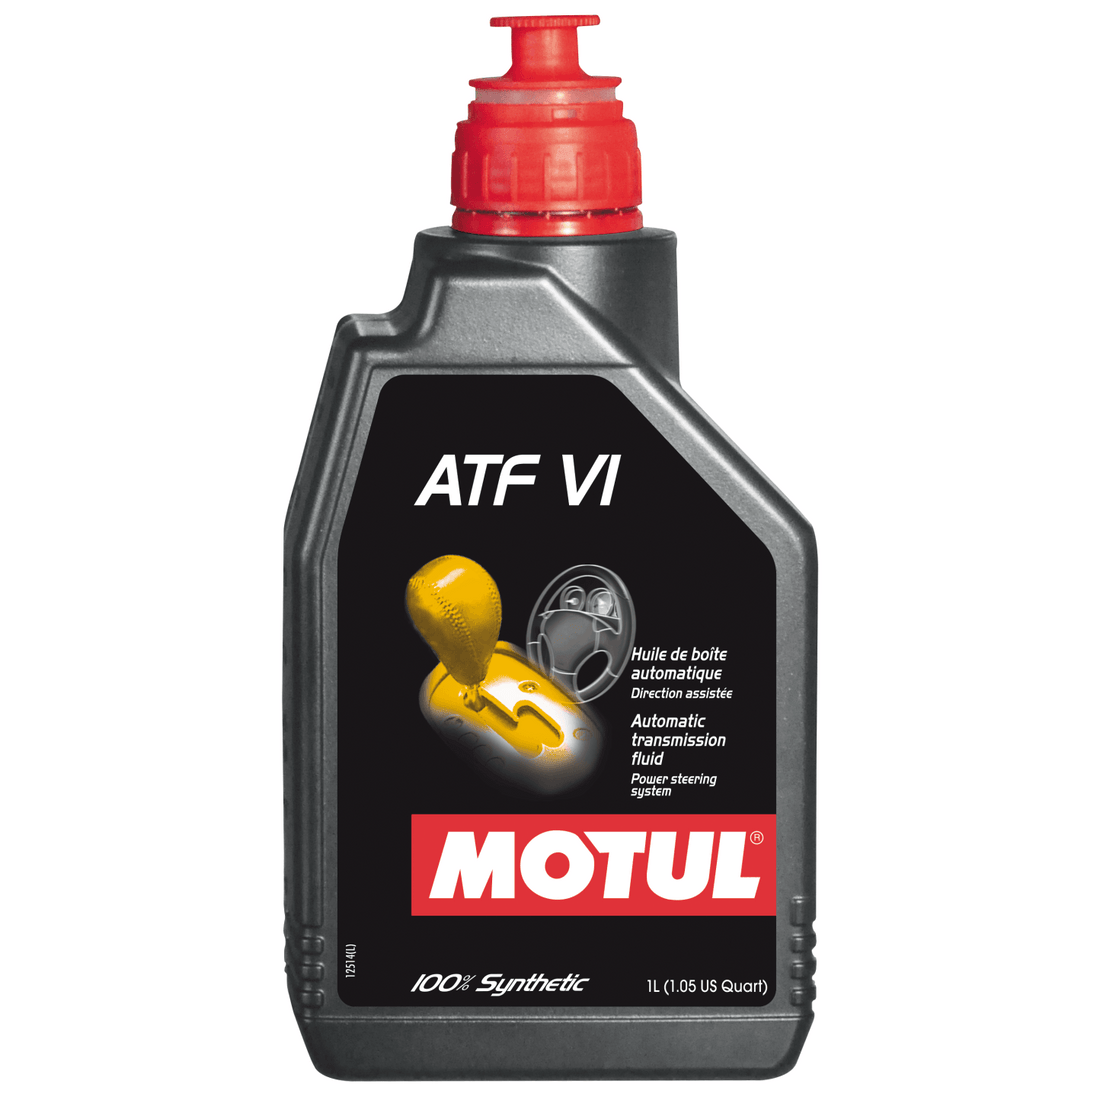 Motul 1L Transmision Fluid ATF VI 100% Synthetic - Saikospeed